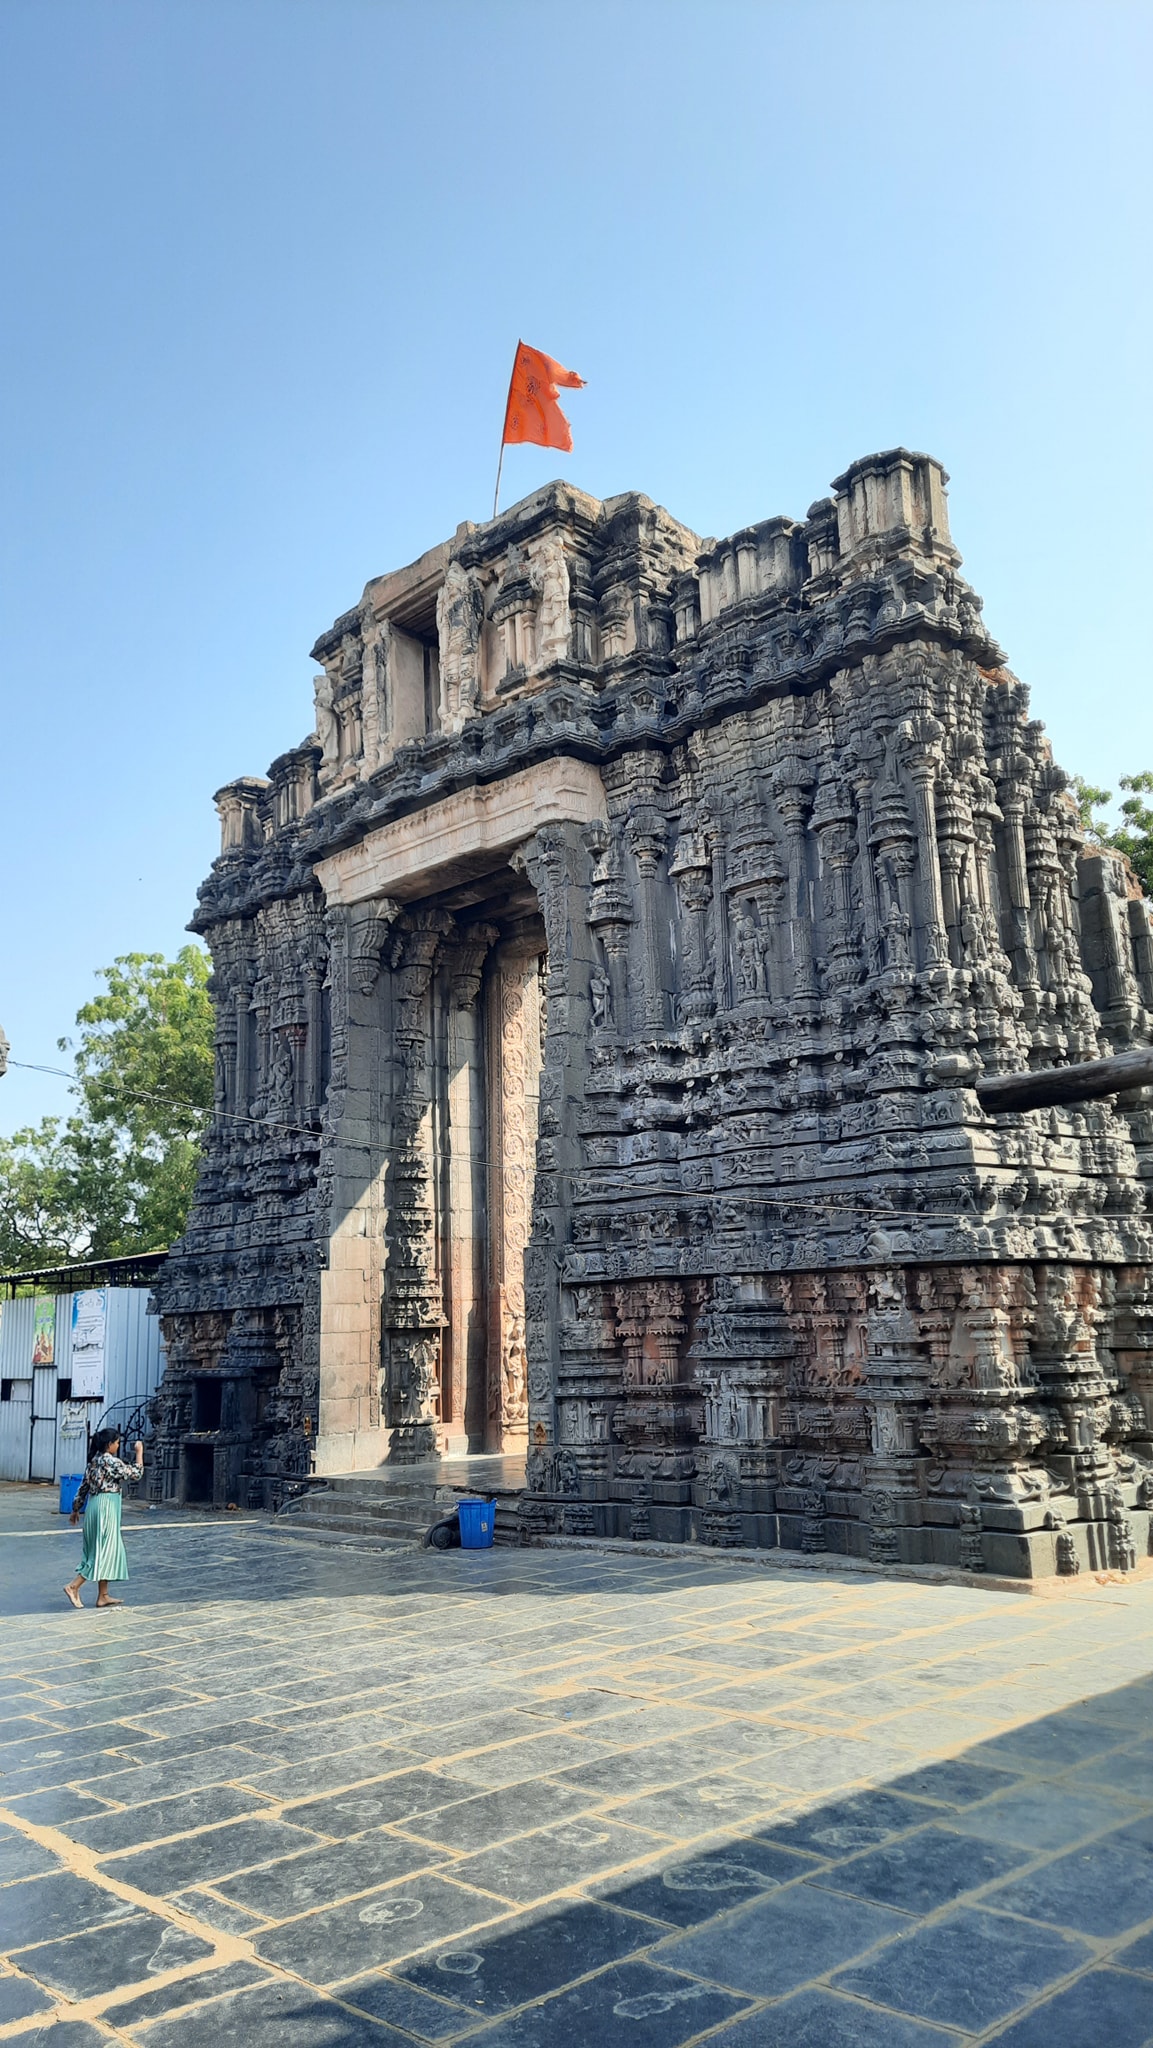 Bugga Ramalingeswara Swamy Temple